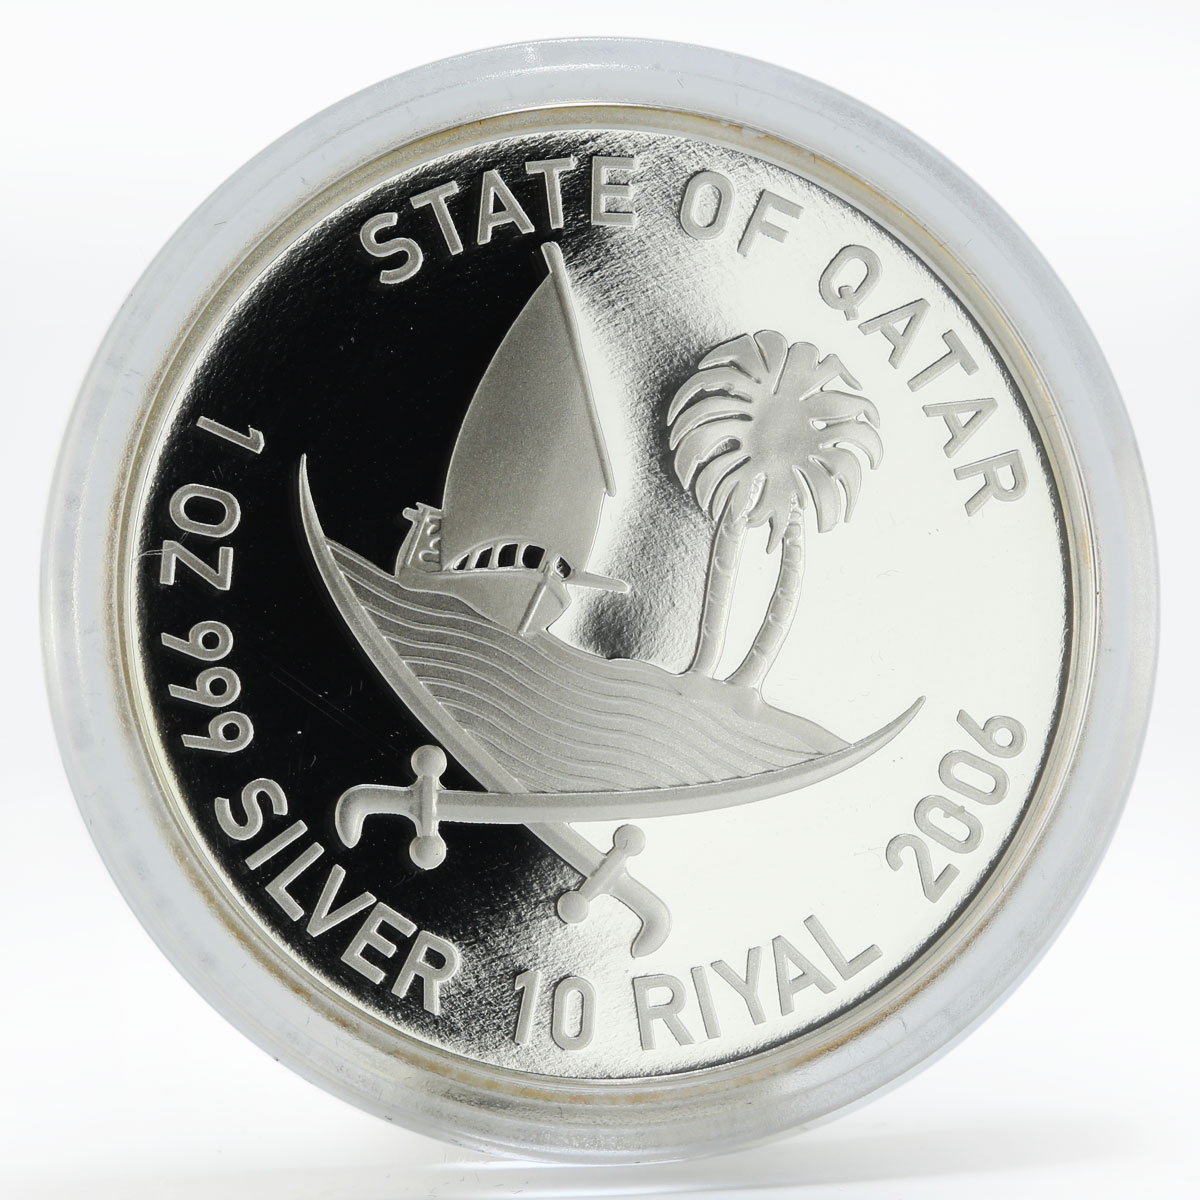 Qatar 10 riyals Asian Games Volleyball proof silver coin 2006